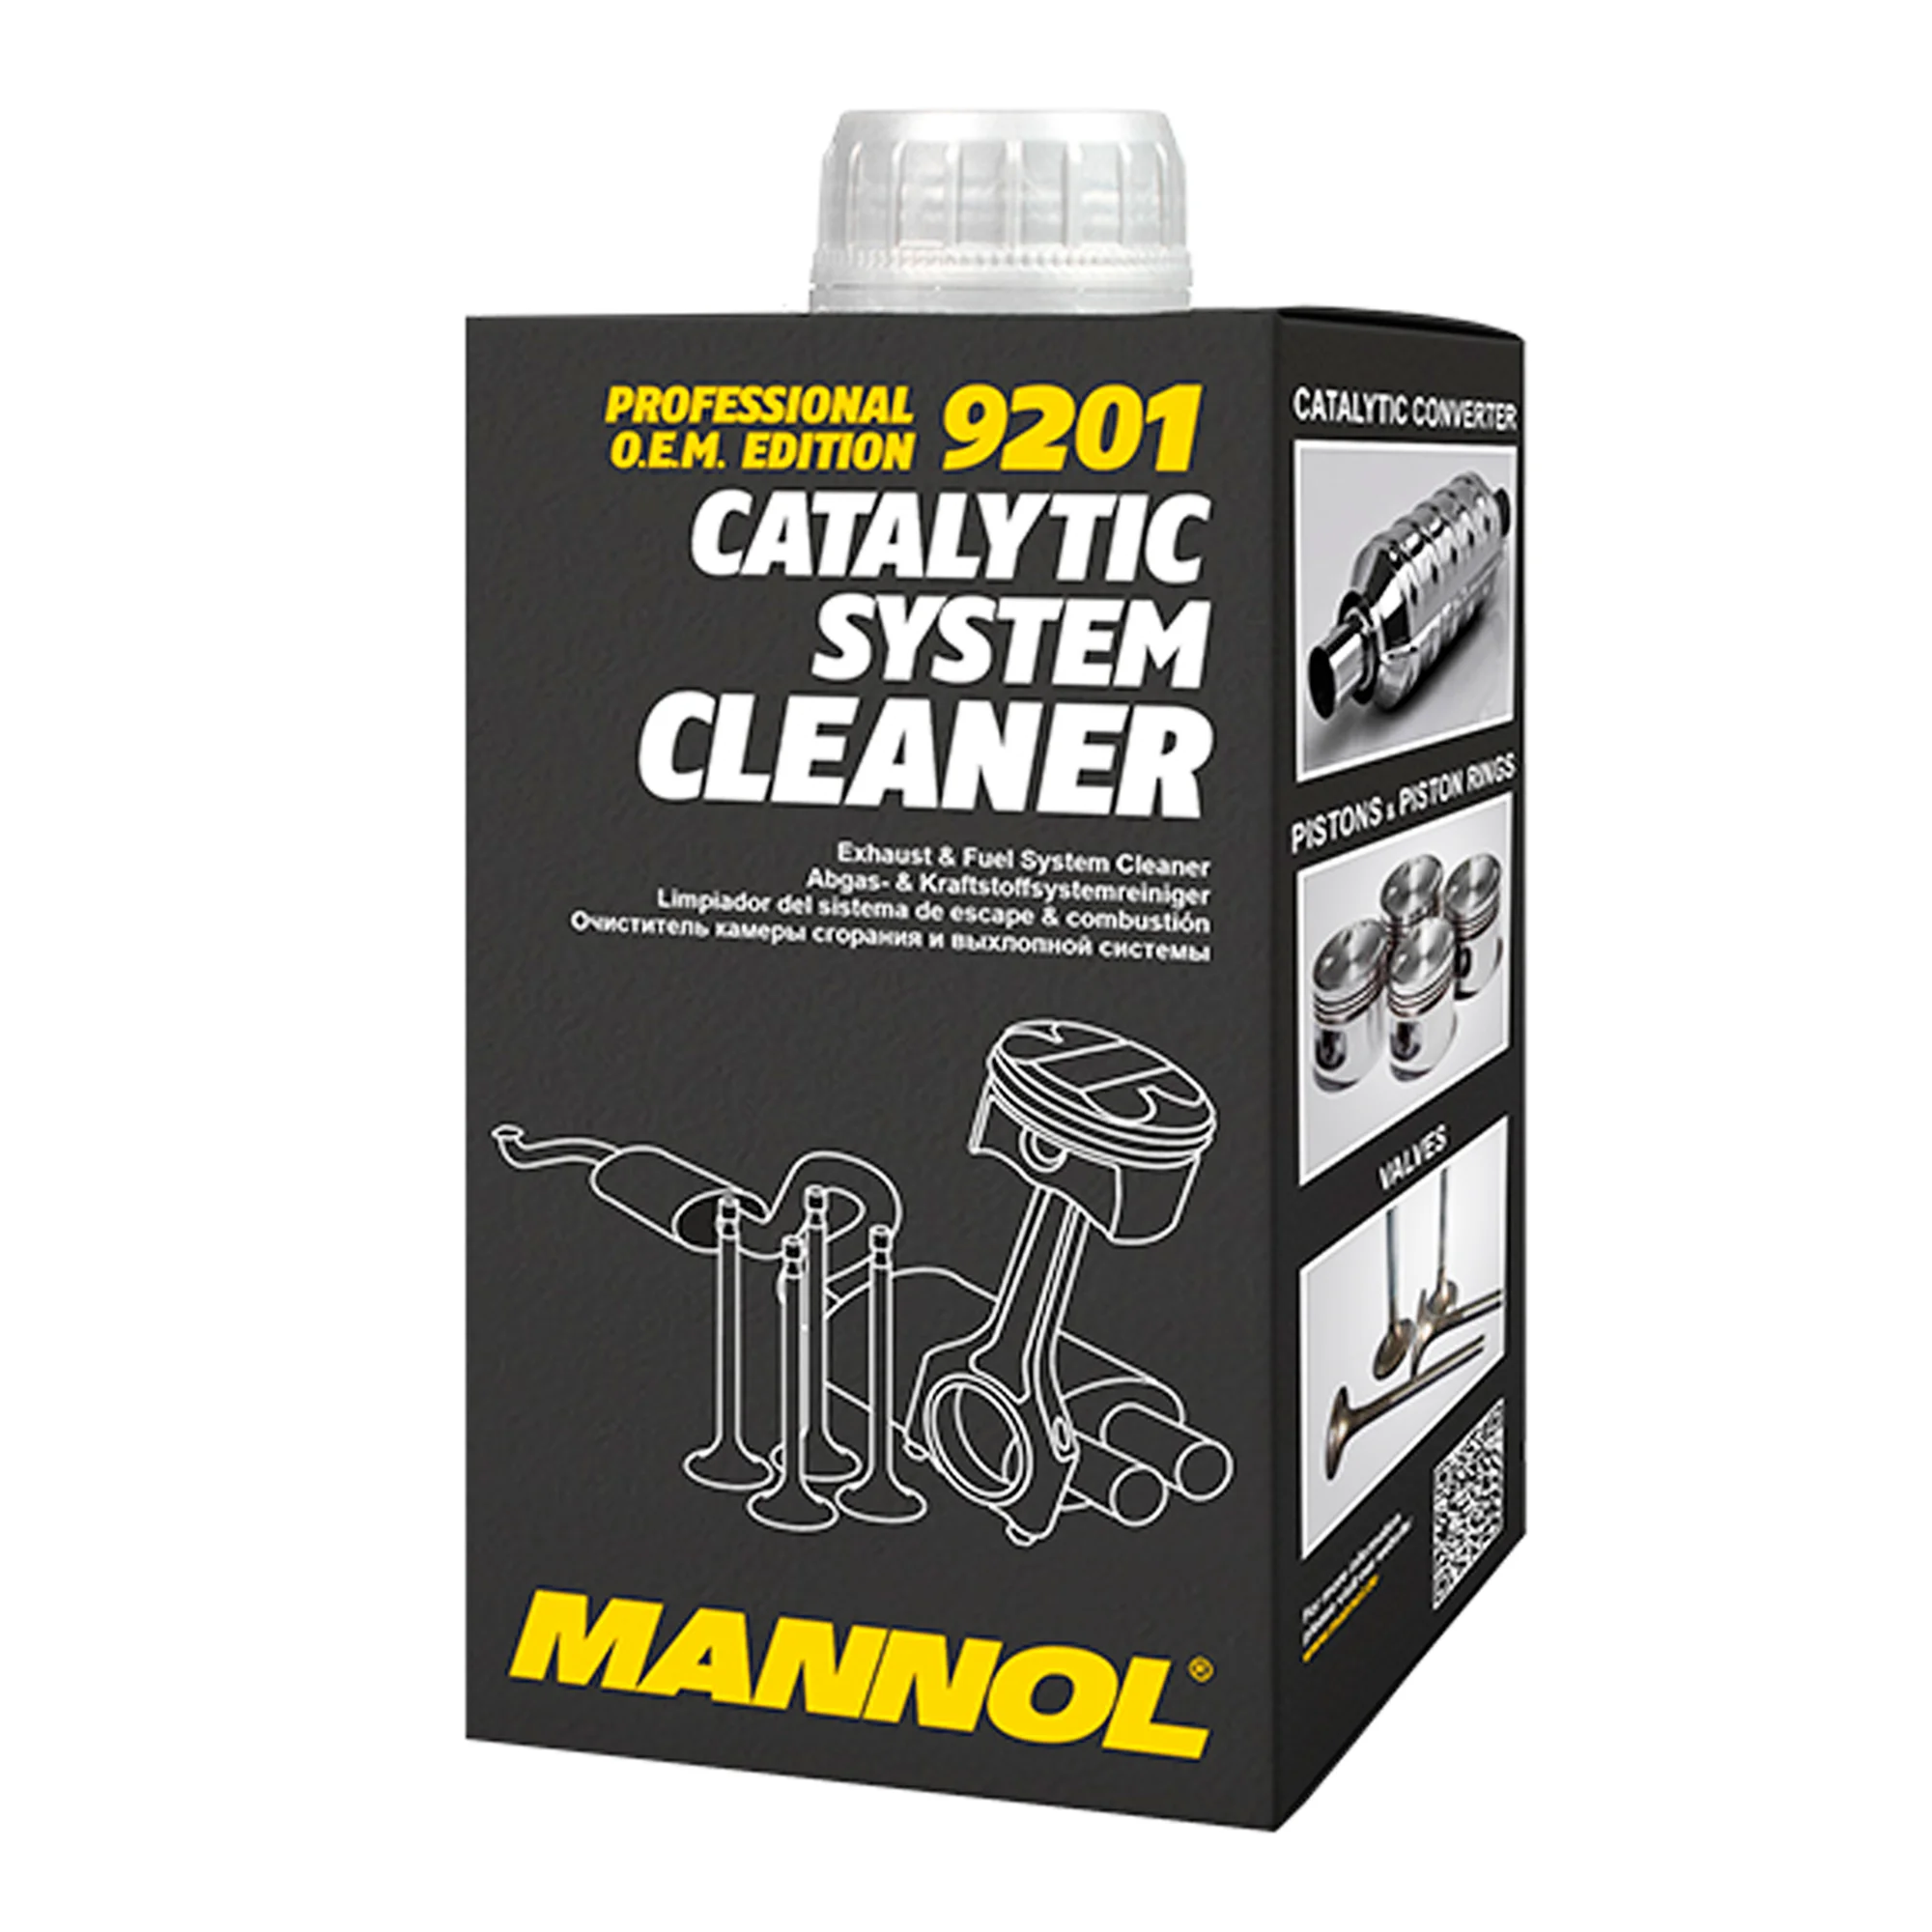 Очищувач системи впускної системи MANNOL Catalytic System Cleaner 500мл (9201)